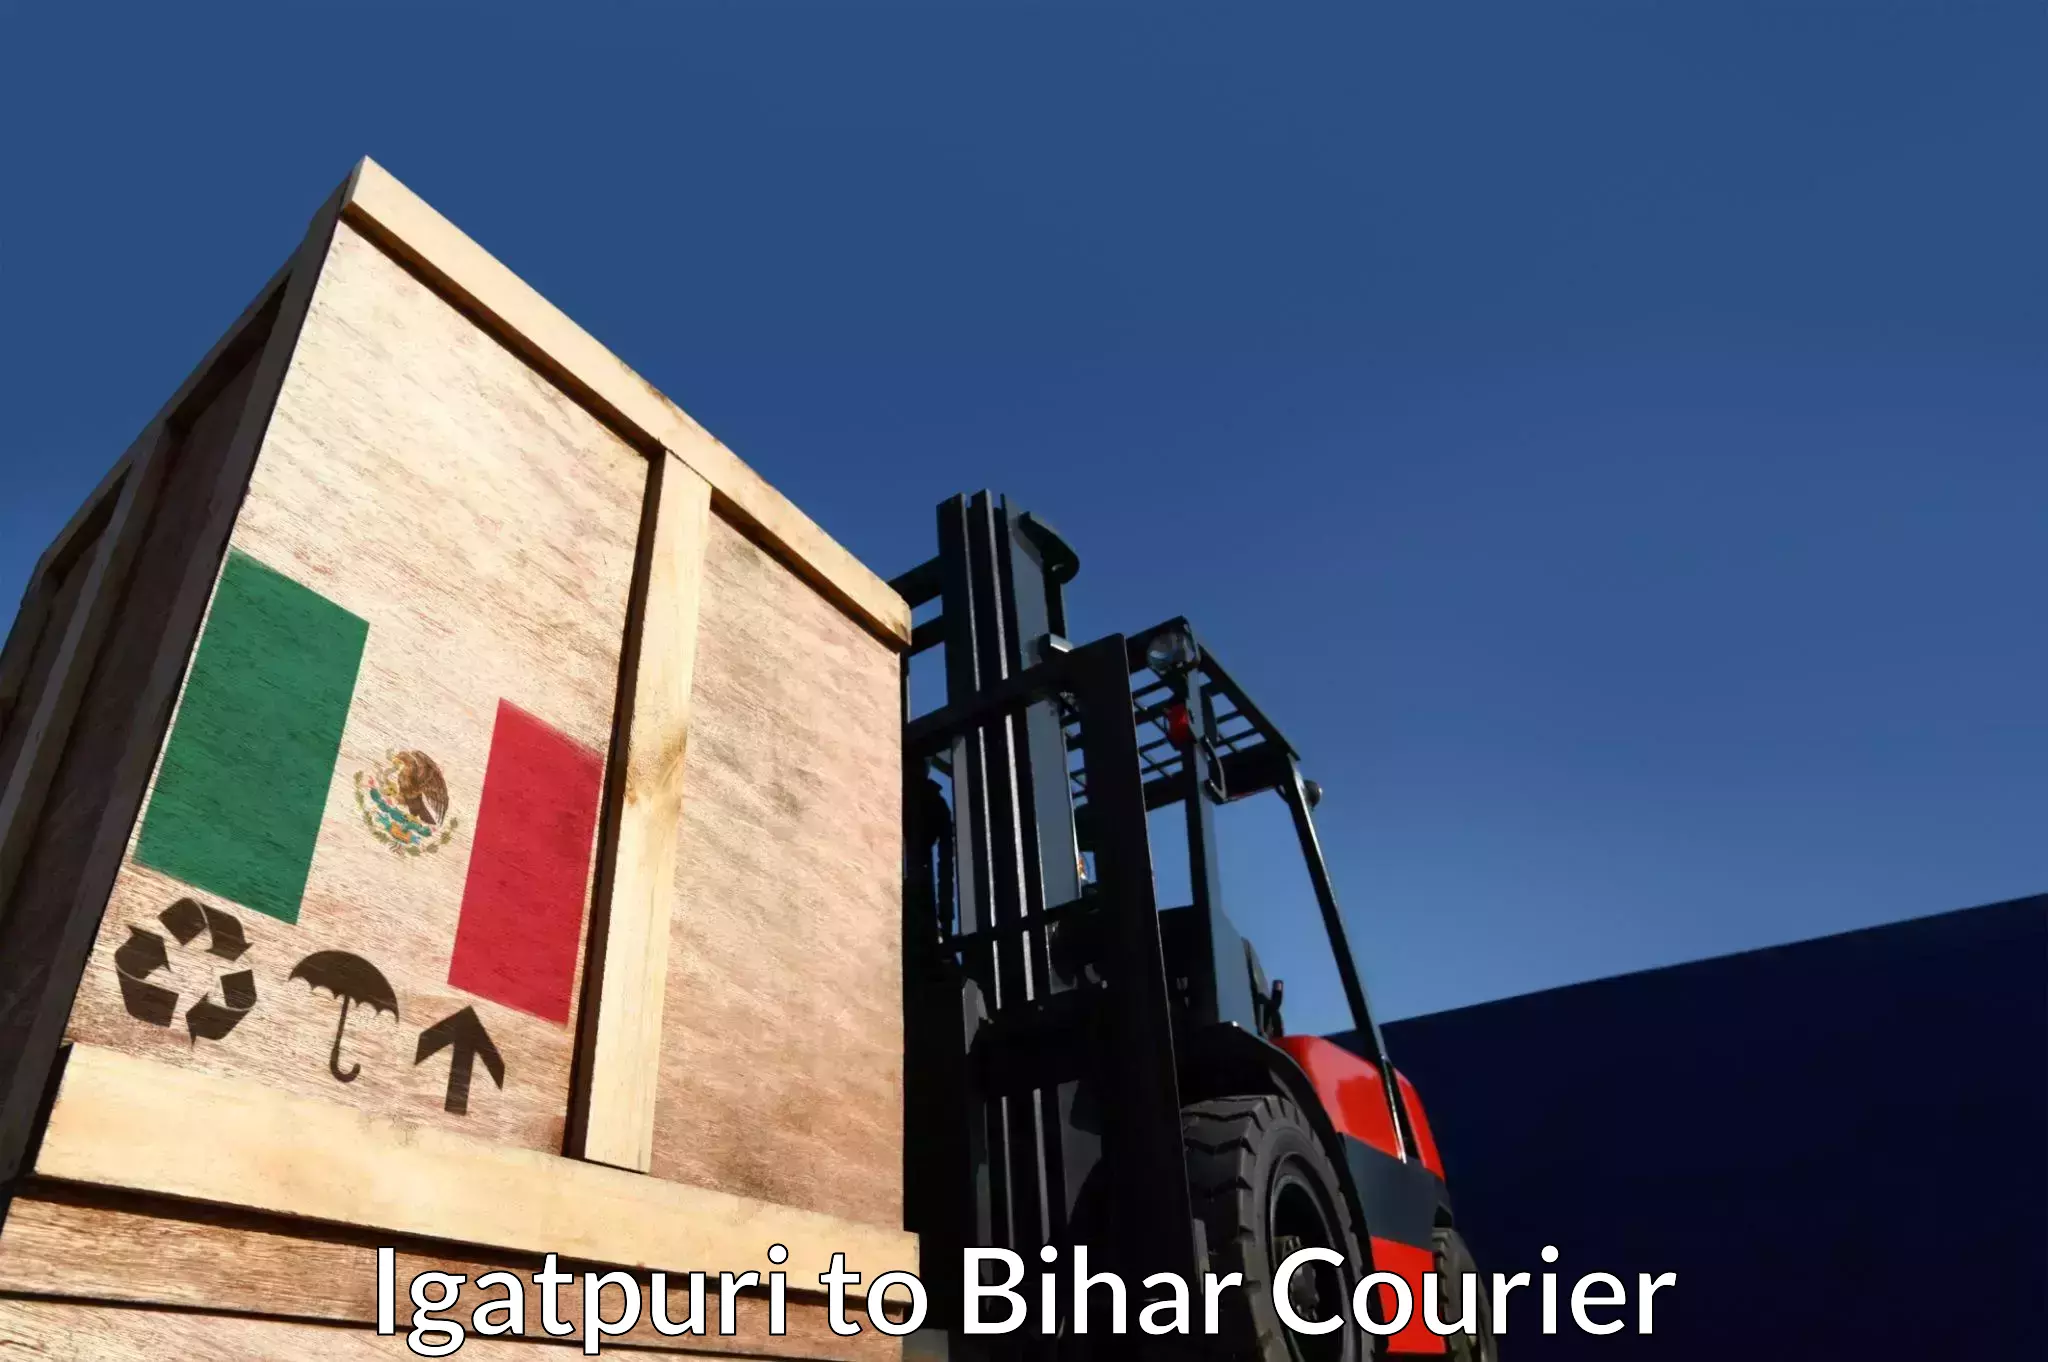 Local delivery service Igatpuri to Bihar